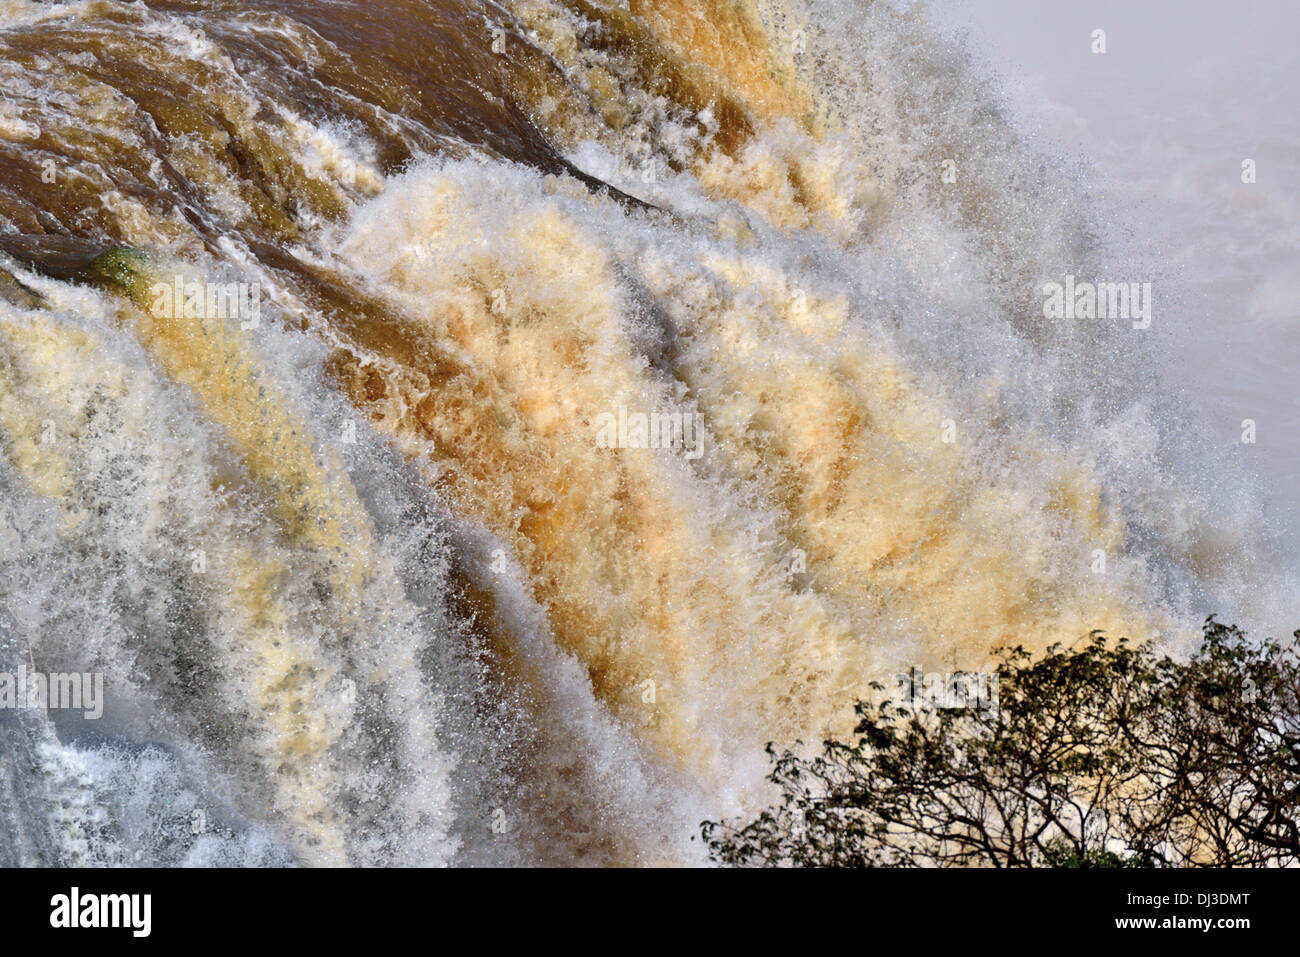 Il Brasile, Iguassu Parco Nazionale: acque ruggenti del Iguaçu cade dopo forti piogge cadute Foto Stock